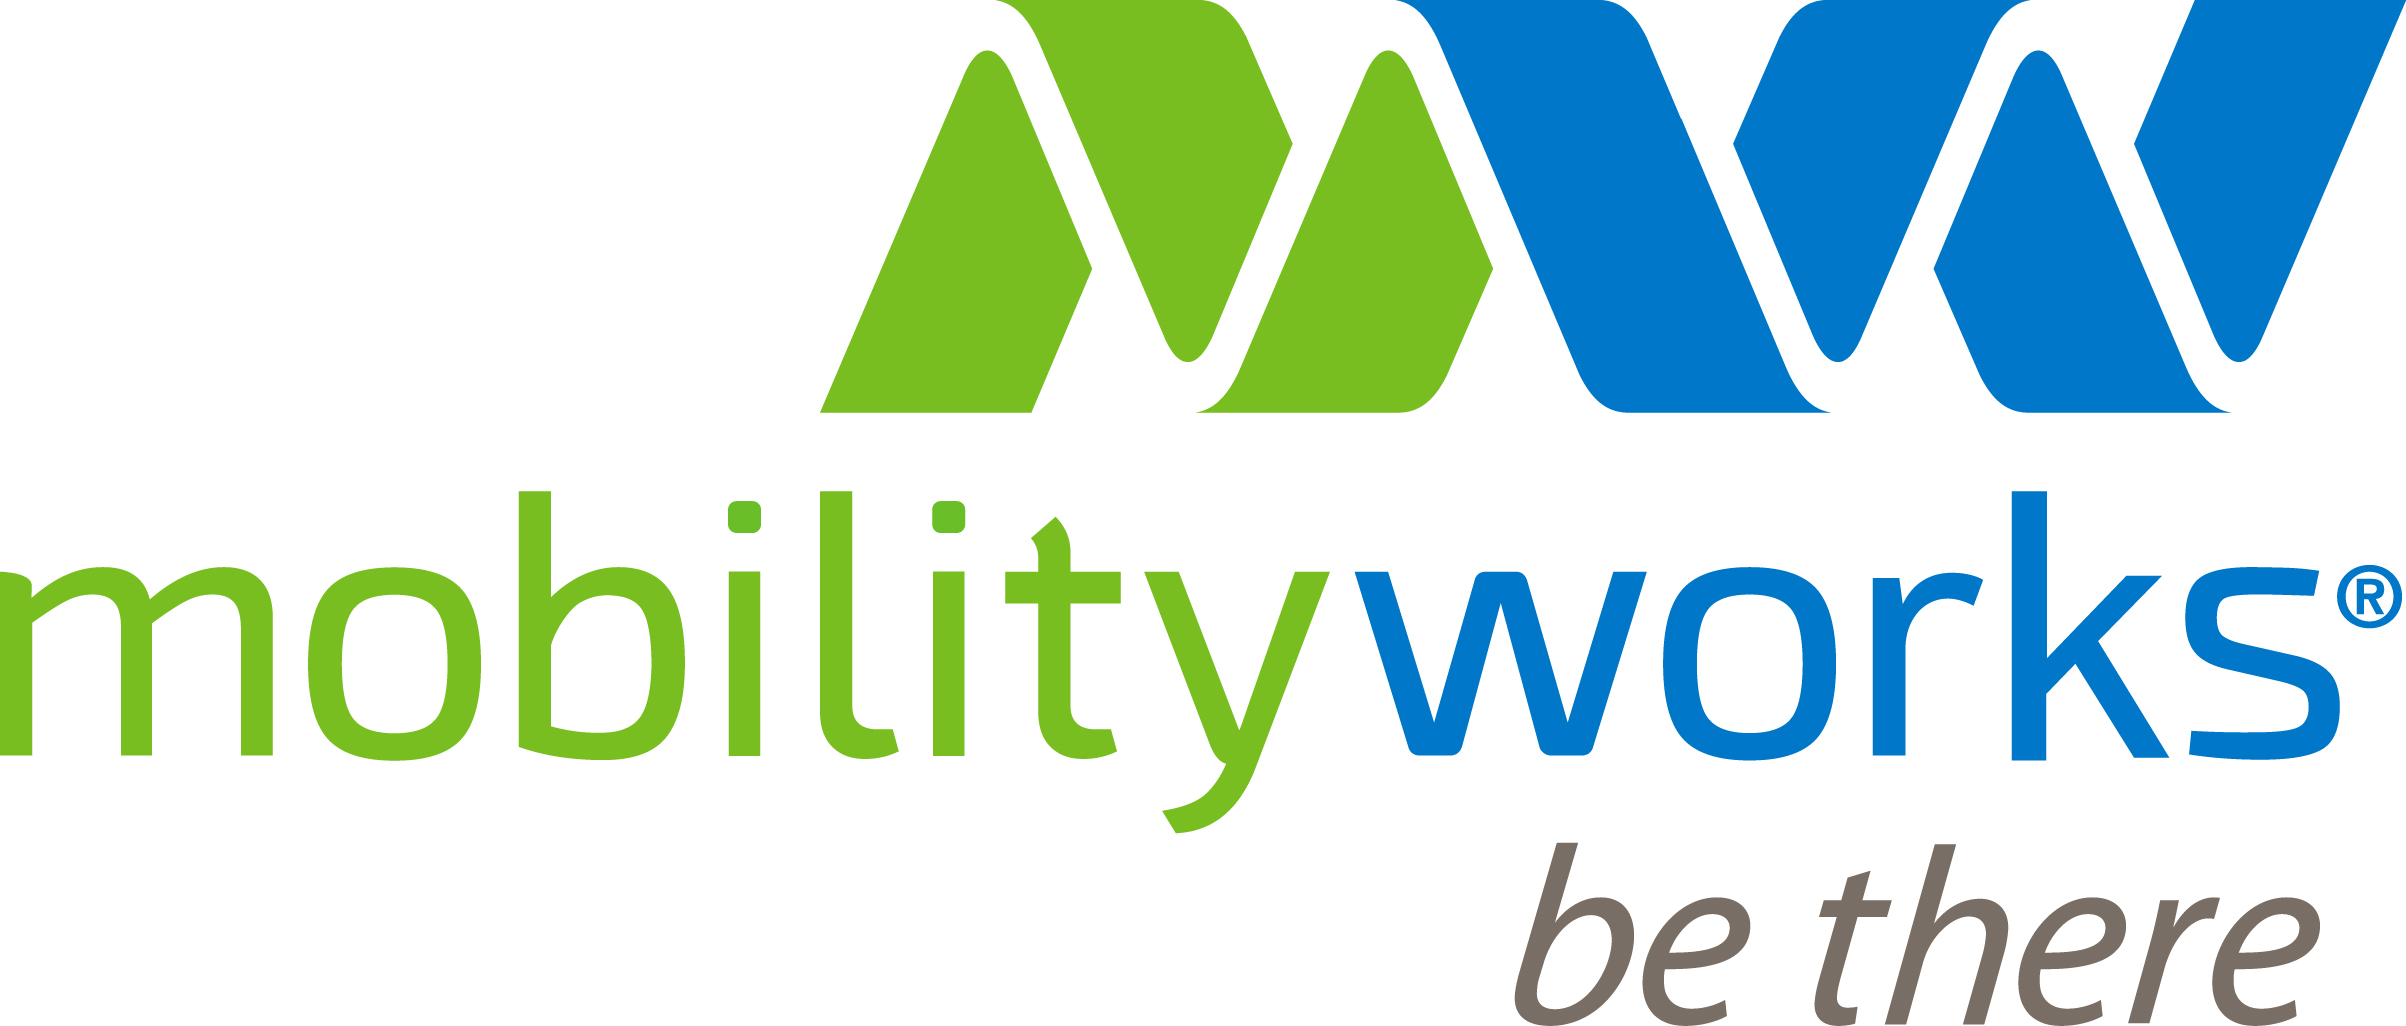 2018 CW MS CAS Sponsor Mobility Works